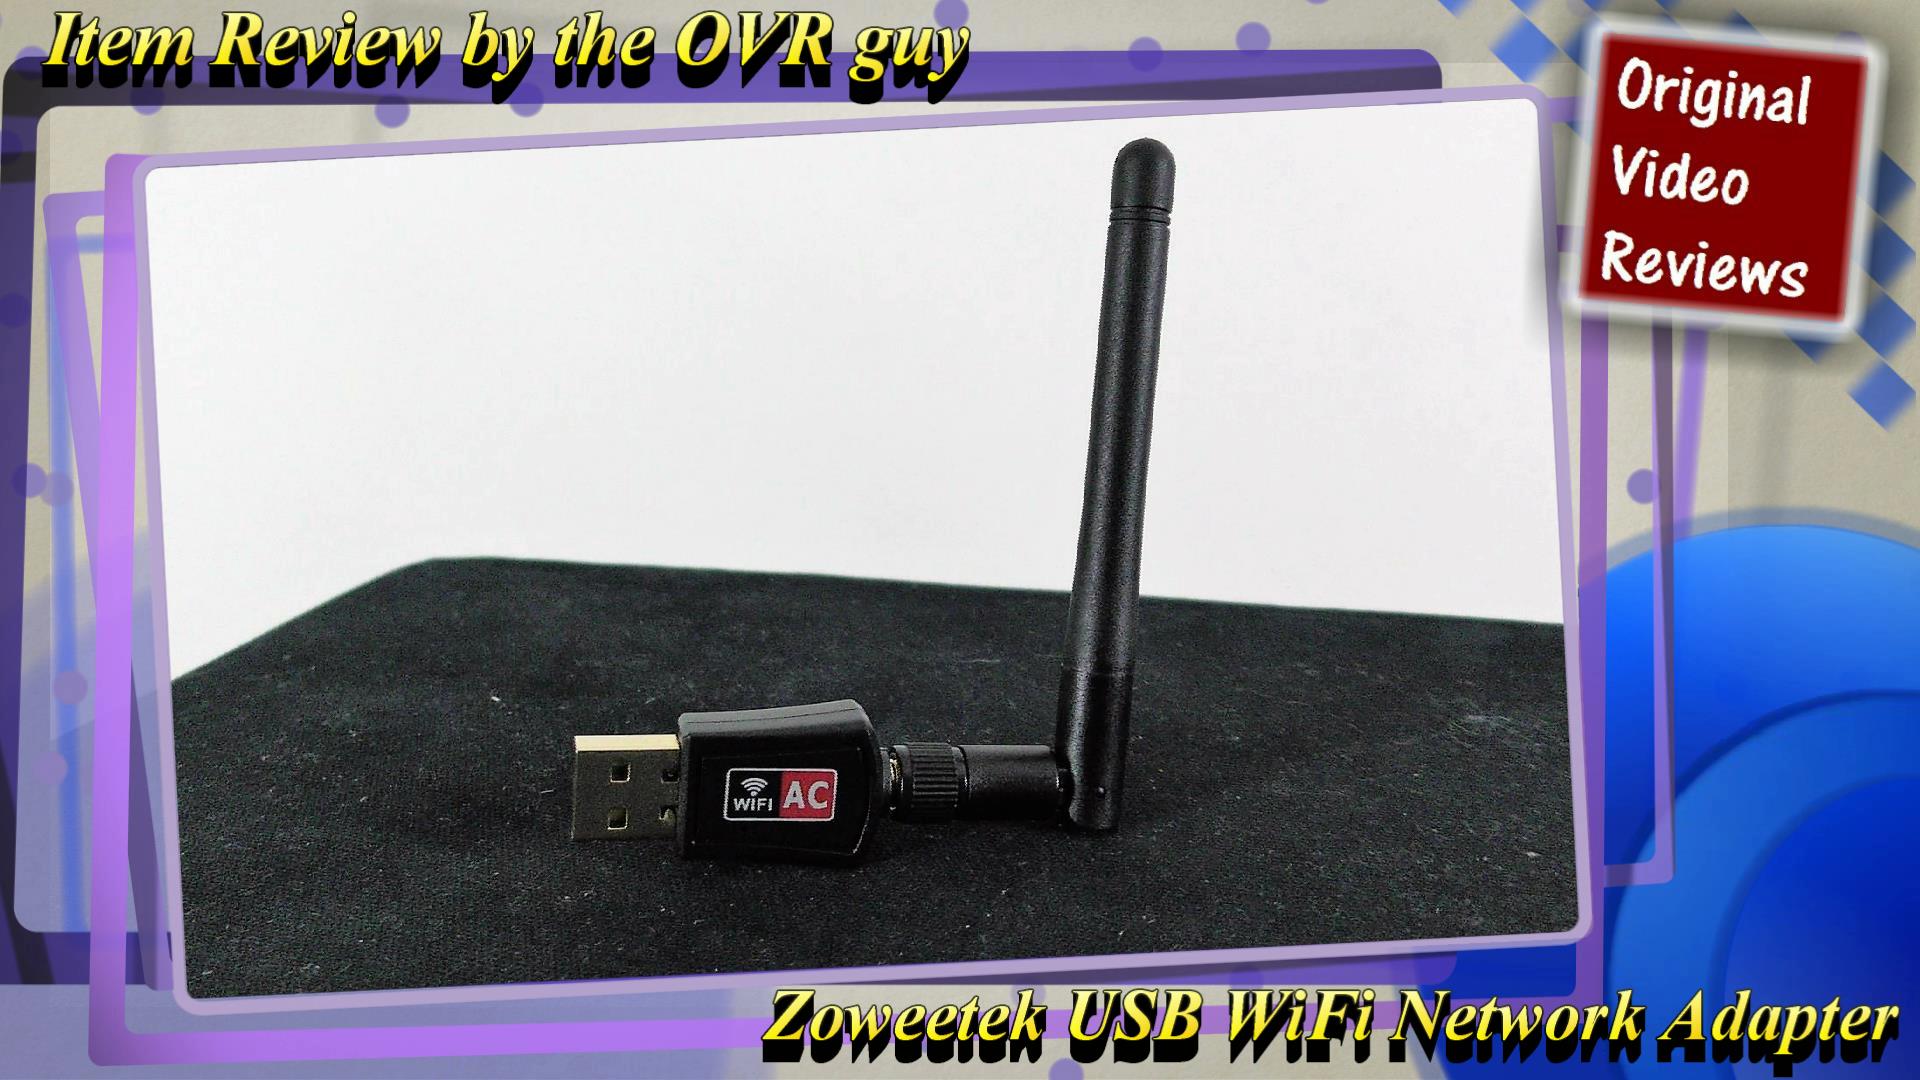 Zoweetek USB WiFi Network Adapter Review (Thumbnail)